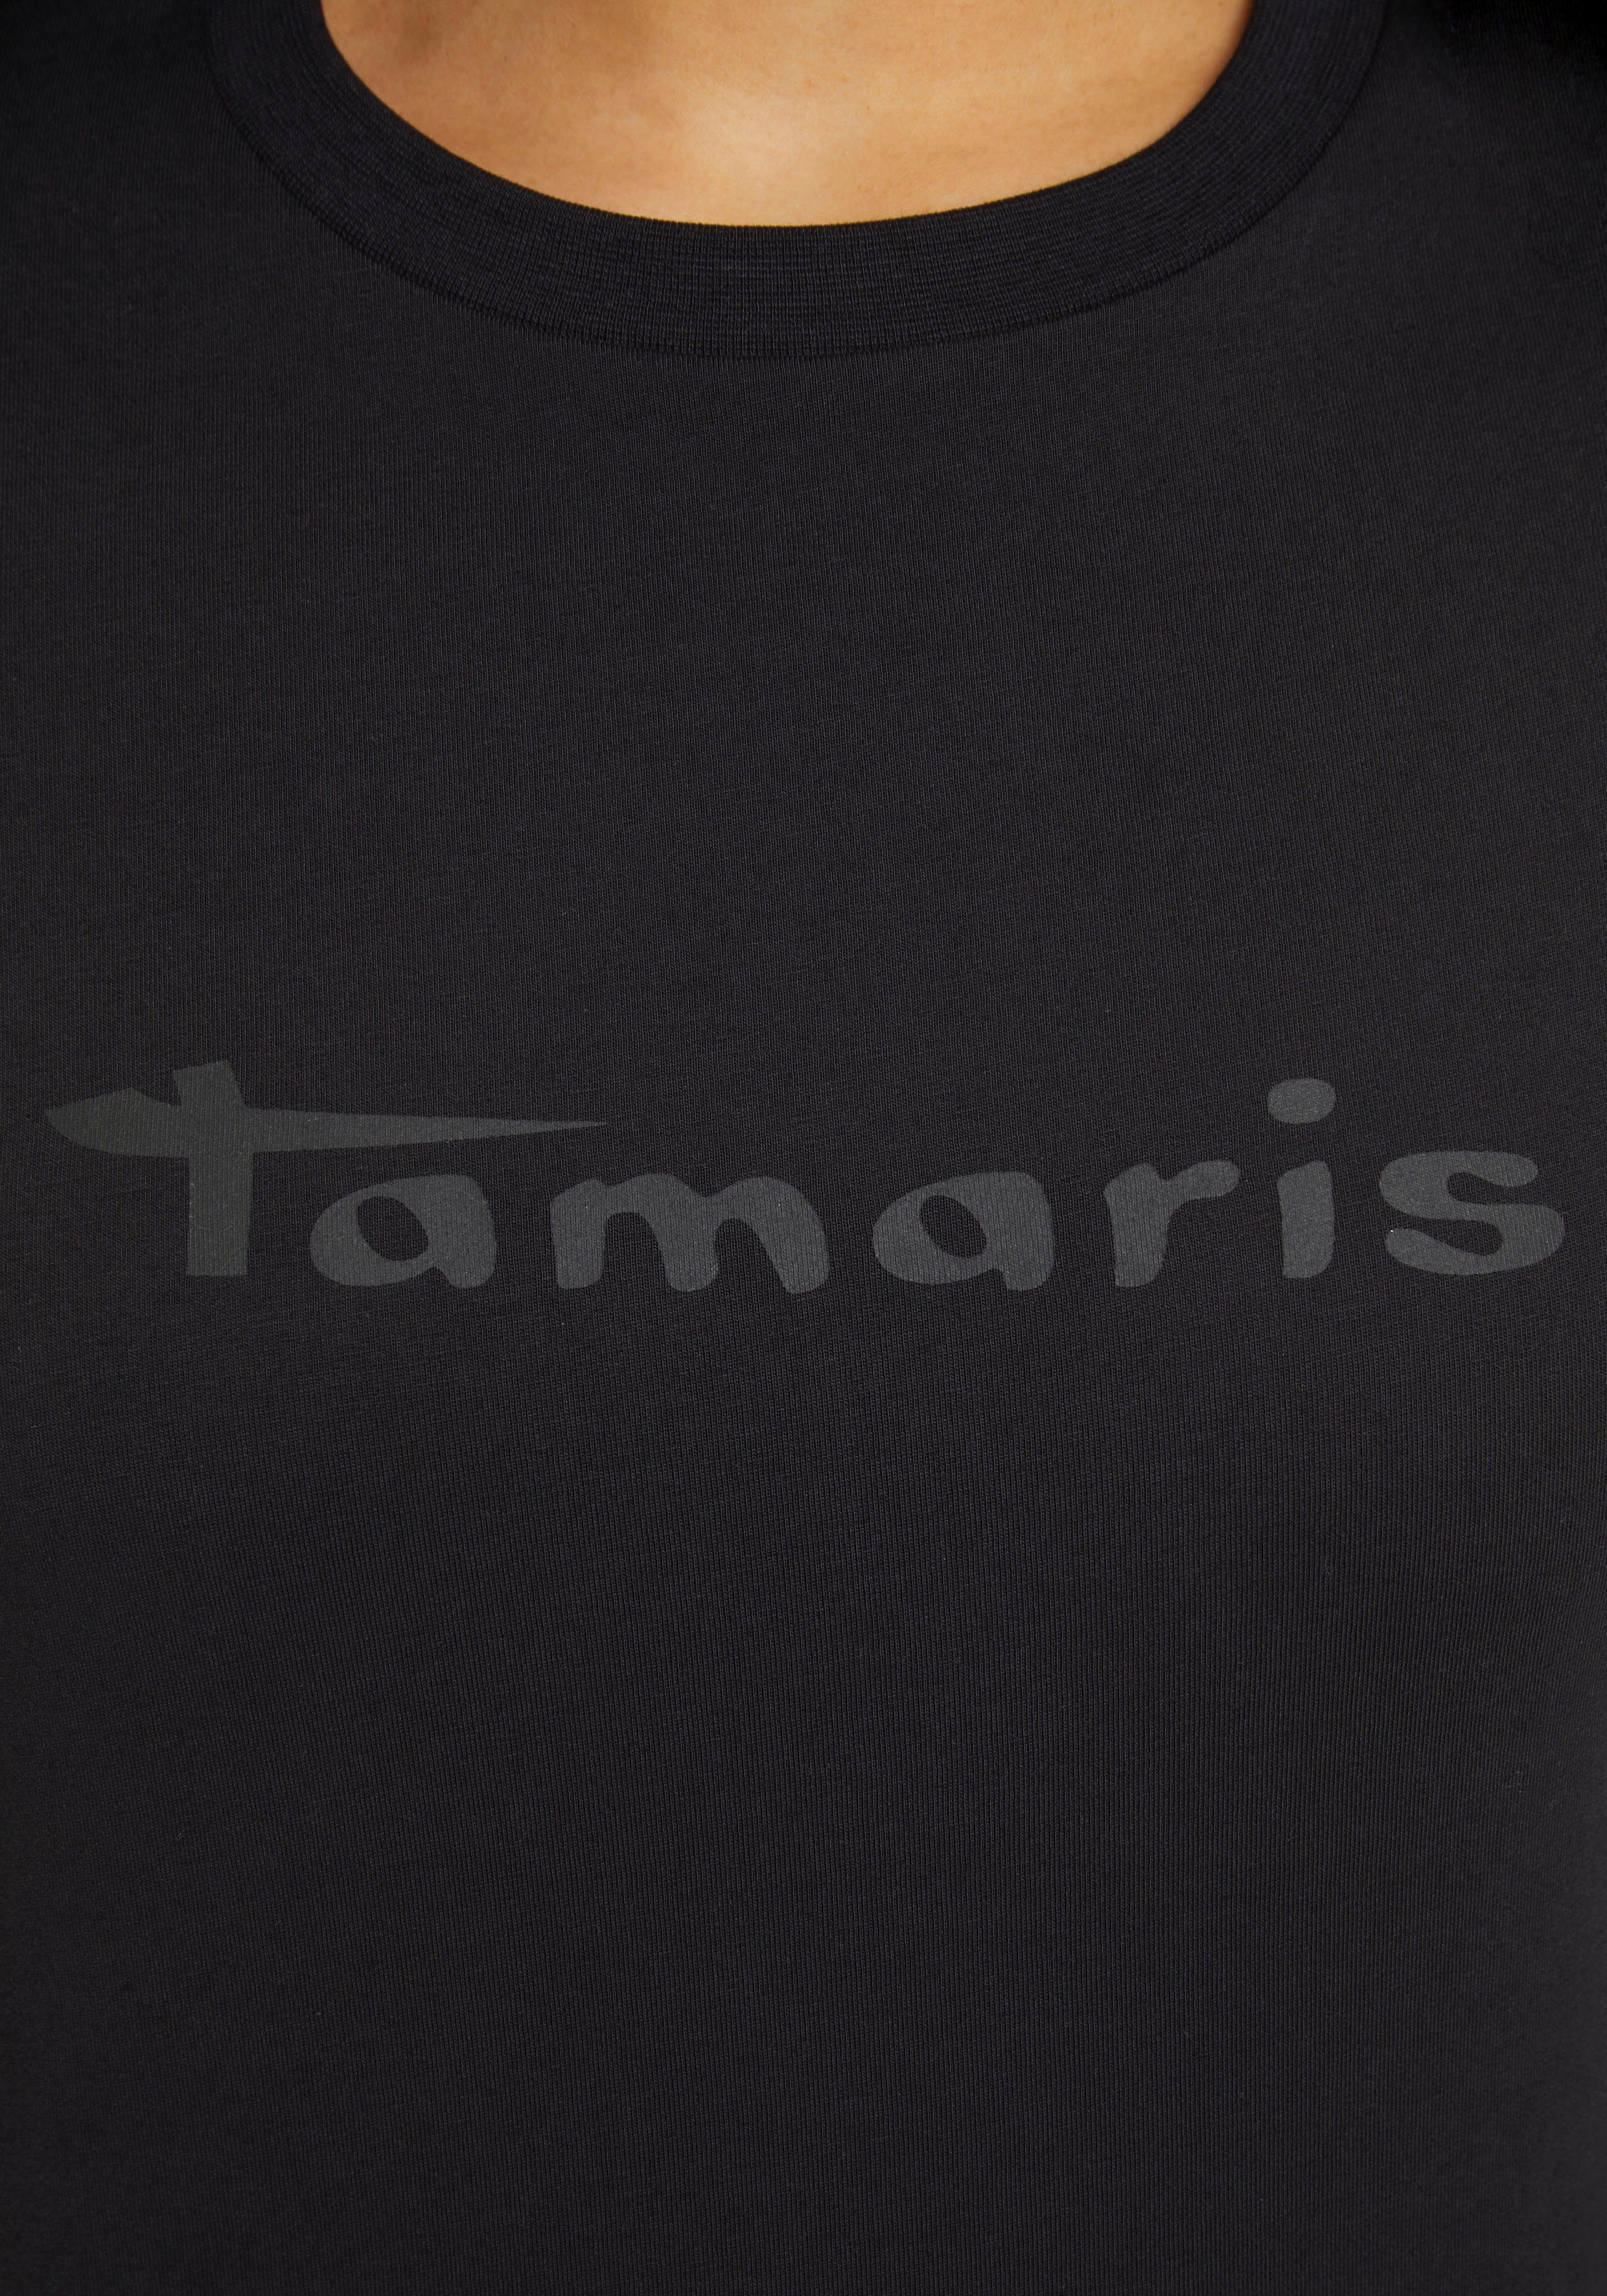 - KOLLEKTION black NEUE Rundhalsausschnitt mit T-Shirt Tamaris beauty